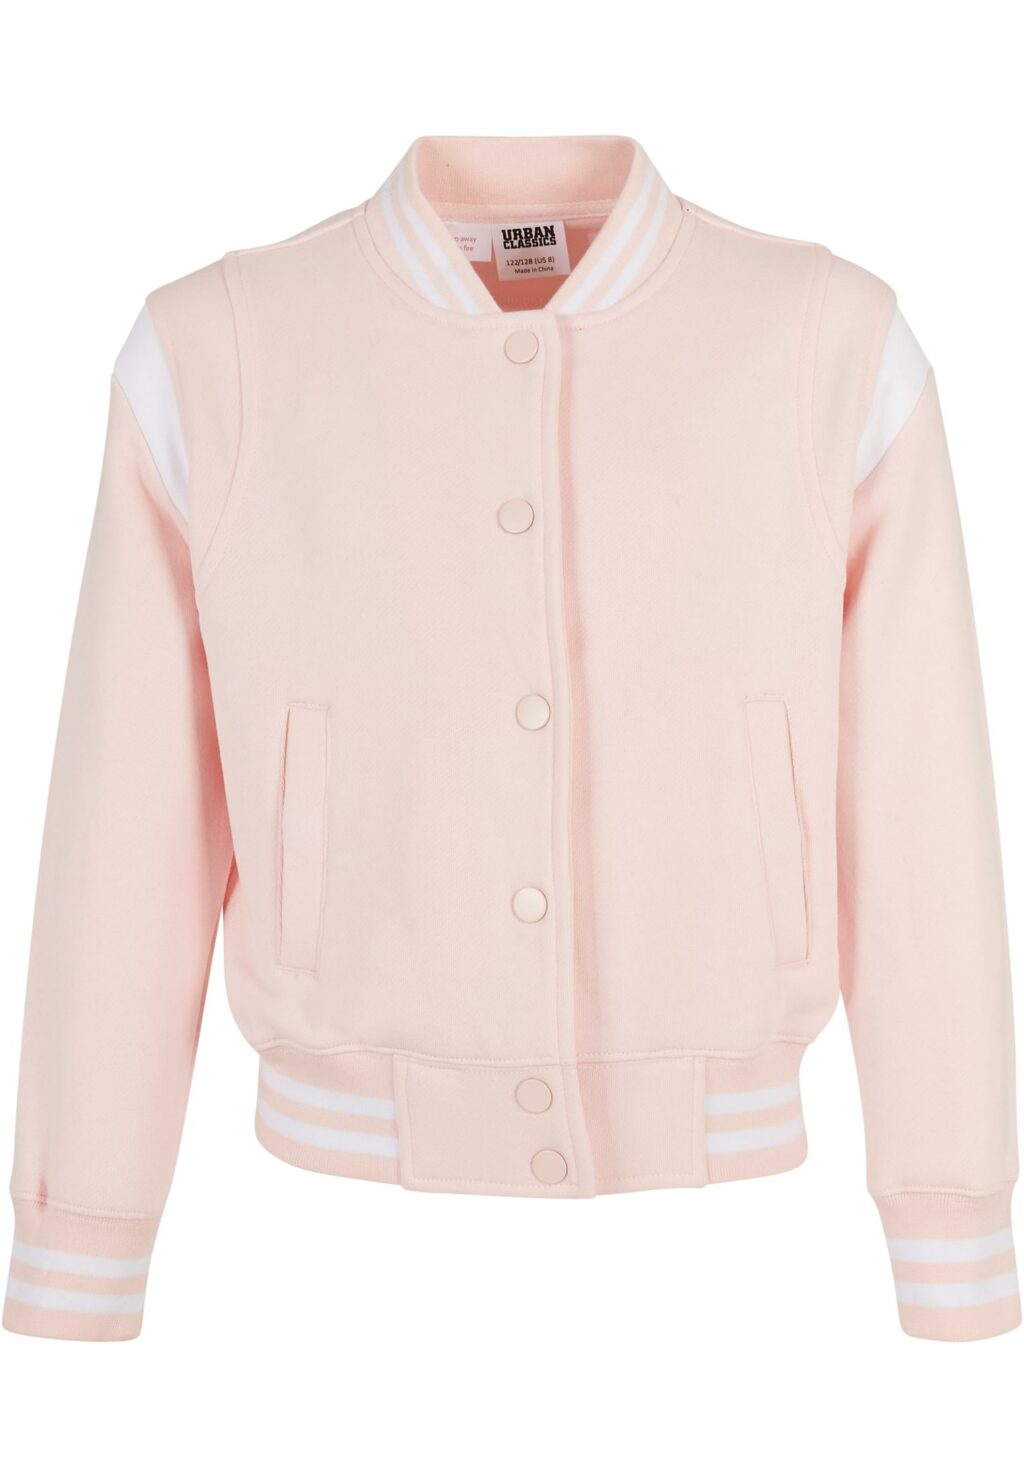 Girls Inset College Sweat Jacket pink/white UCK2618